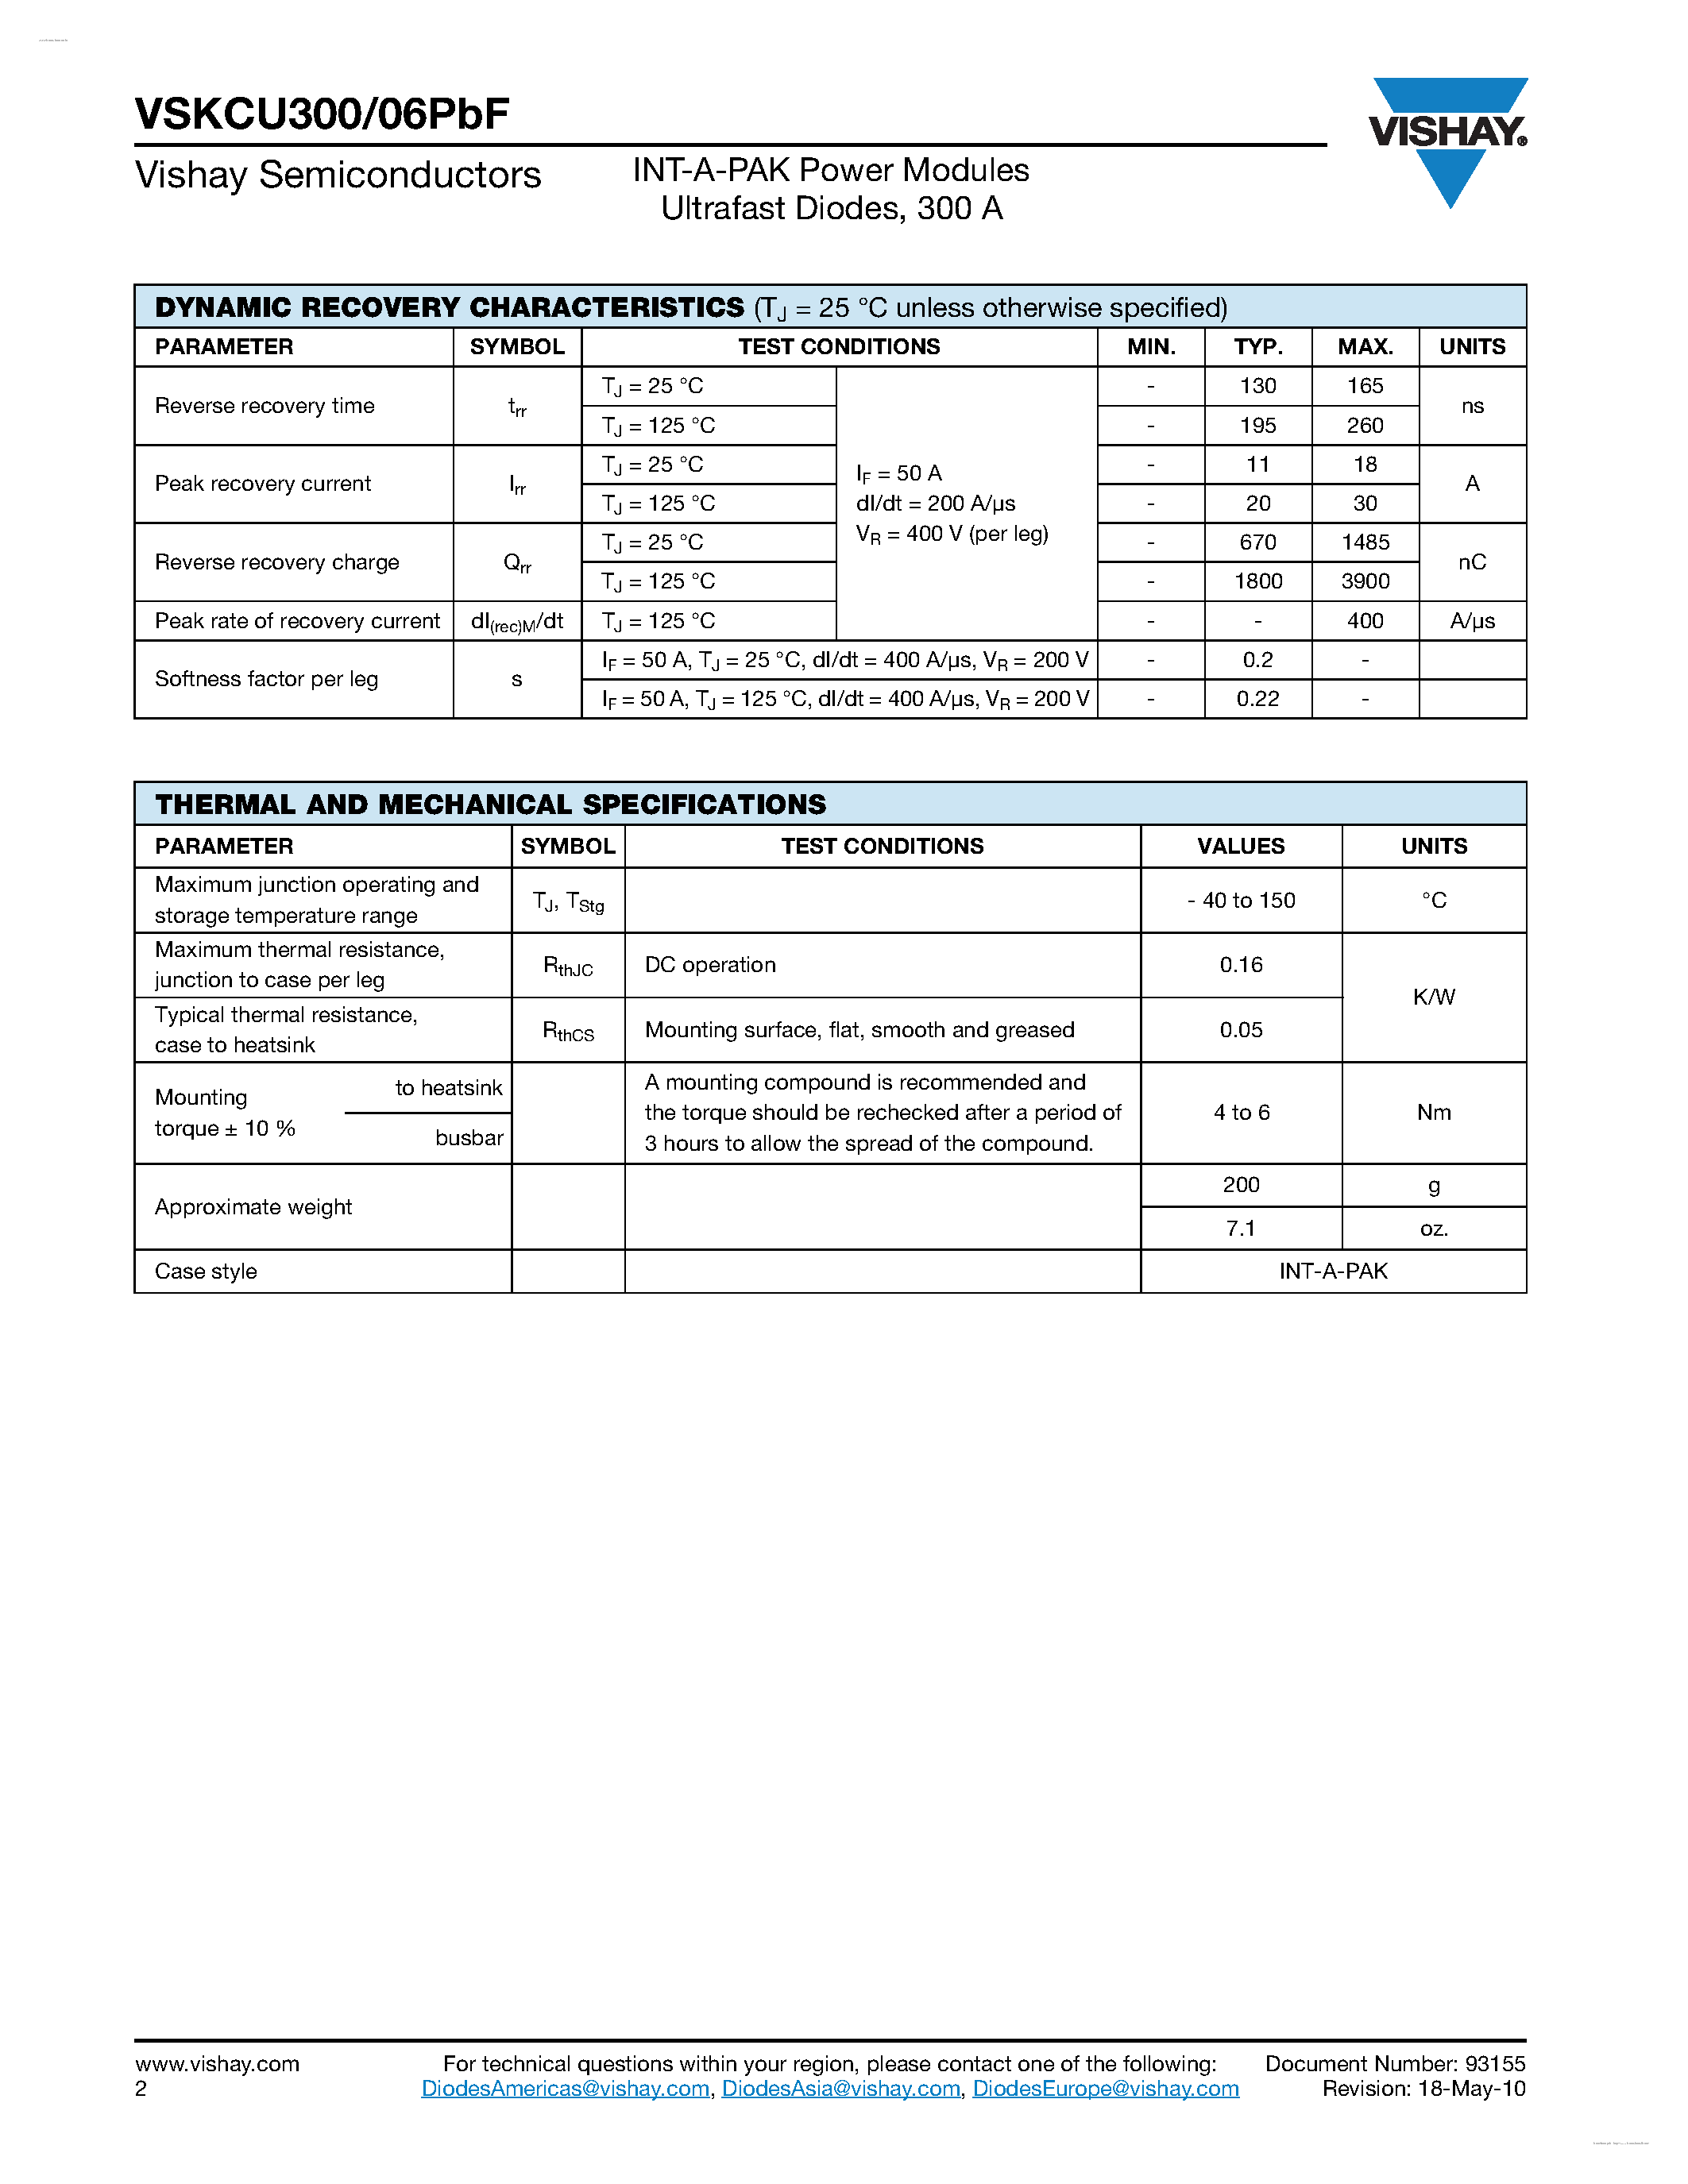 Datasheet VSKCU300/06PBF - INT-A-PAK Power Modules Ultrafast Diodes page 2